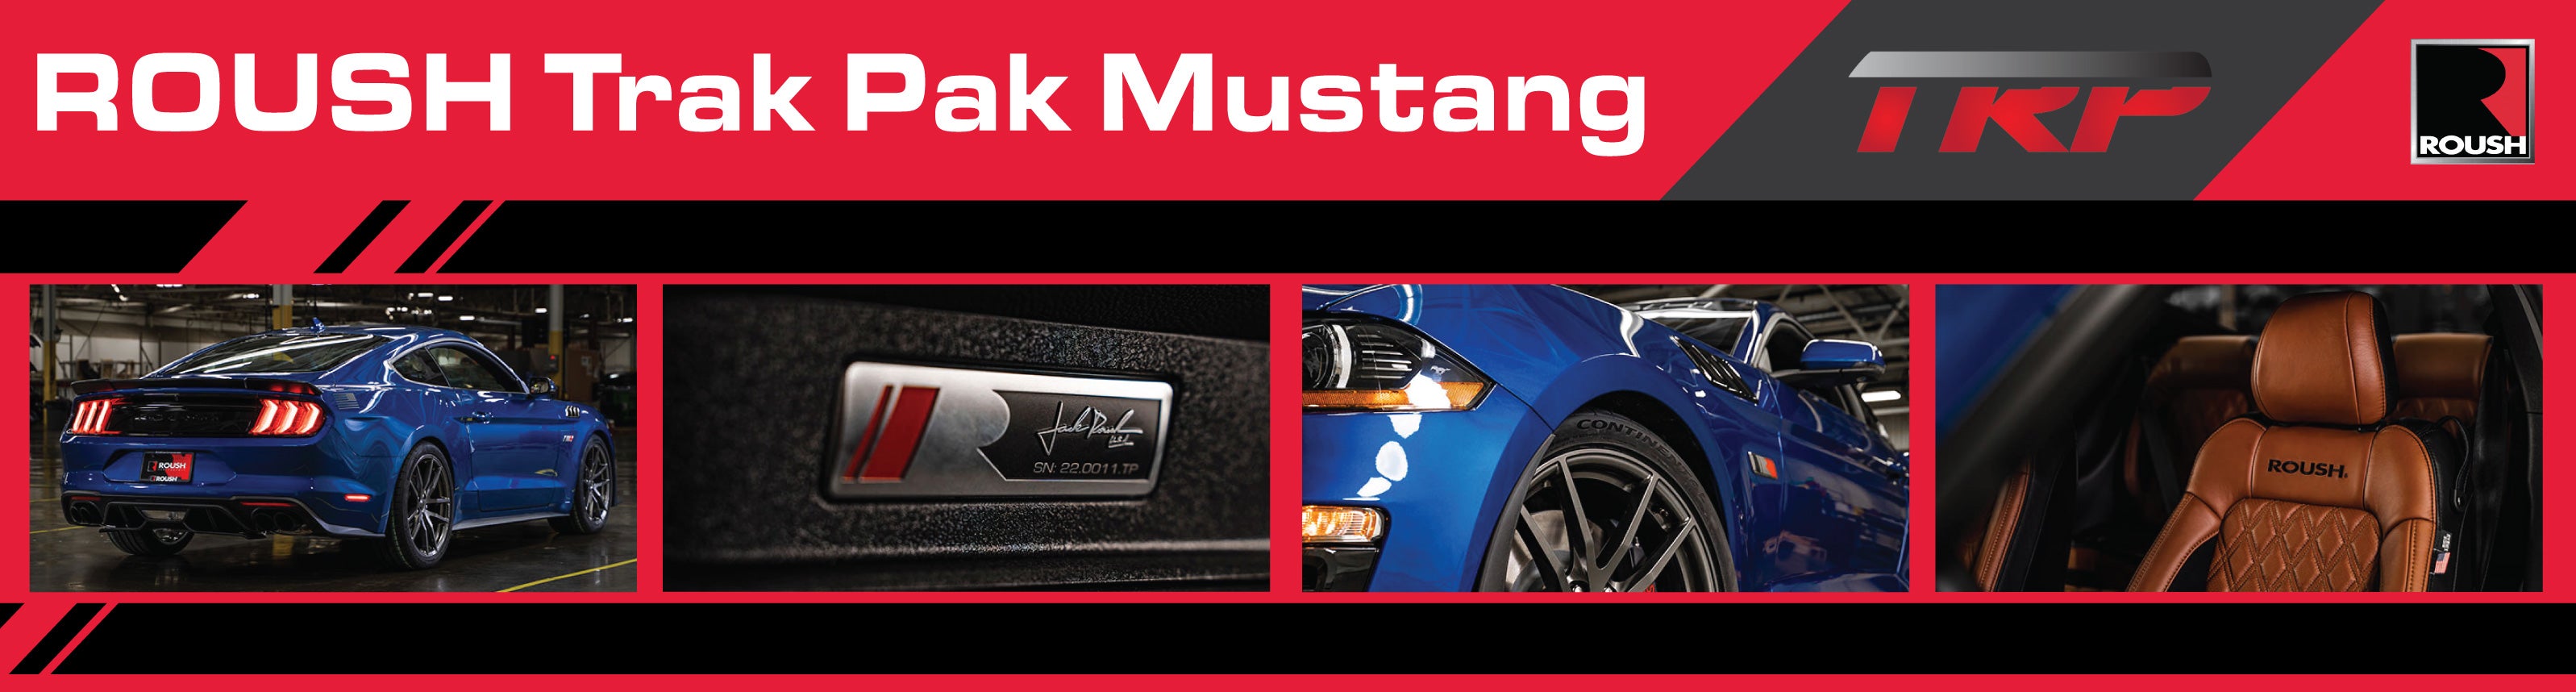 ROUSH Trak Pak Mustang for Sale